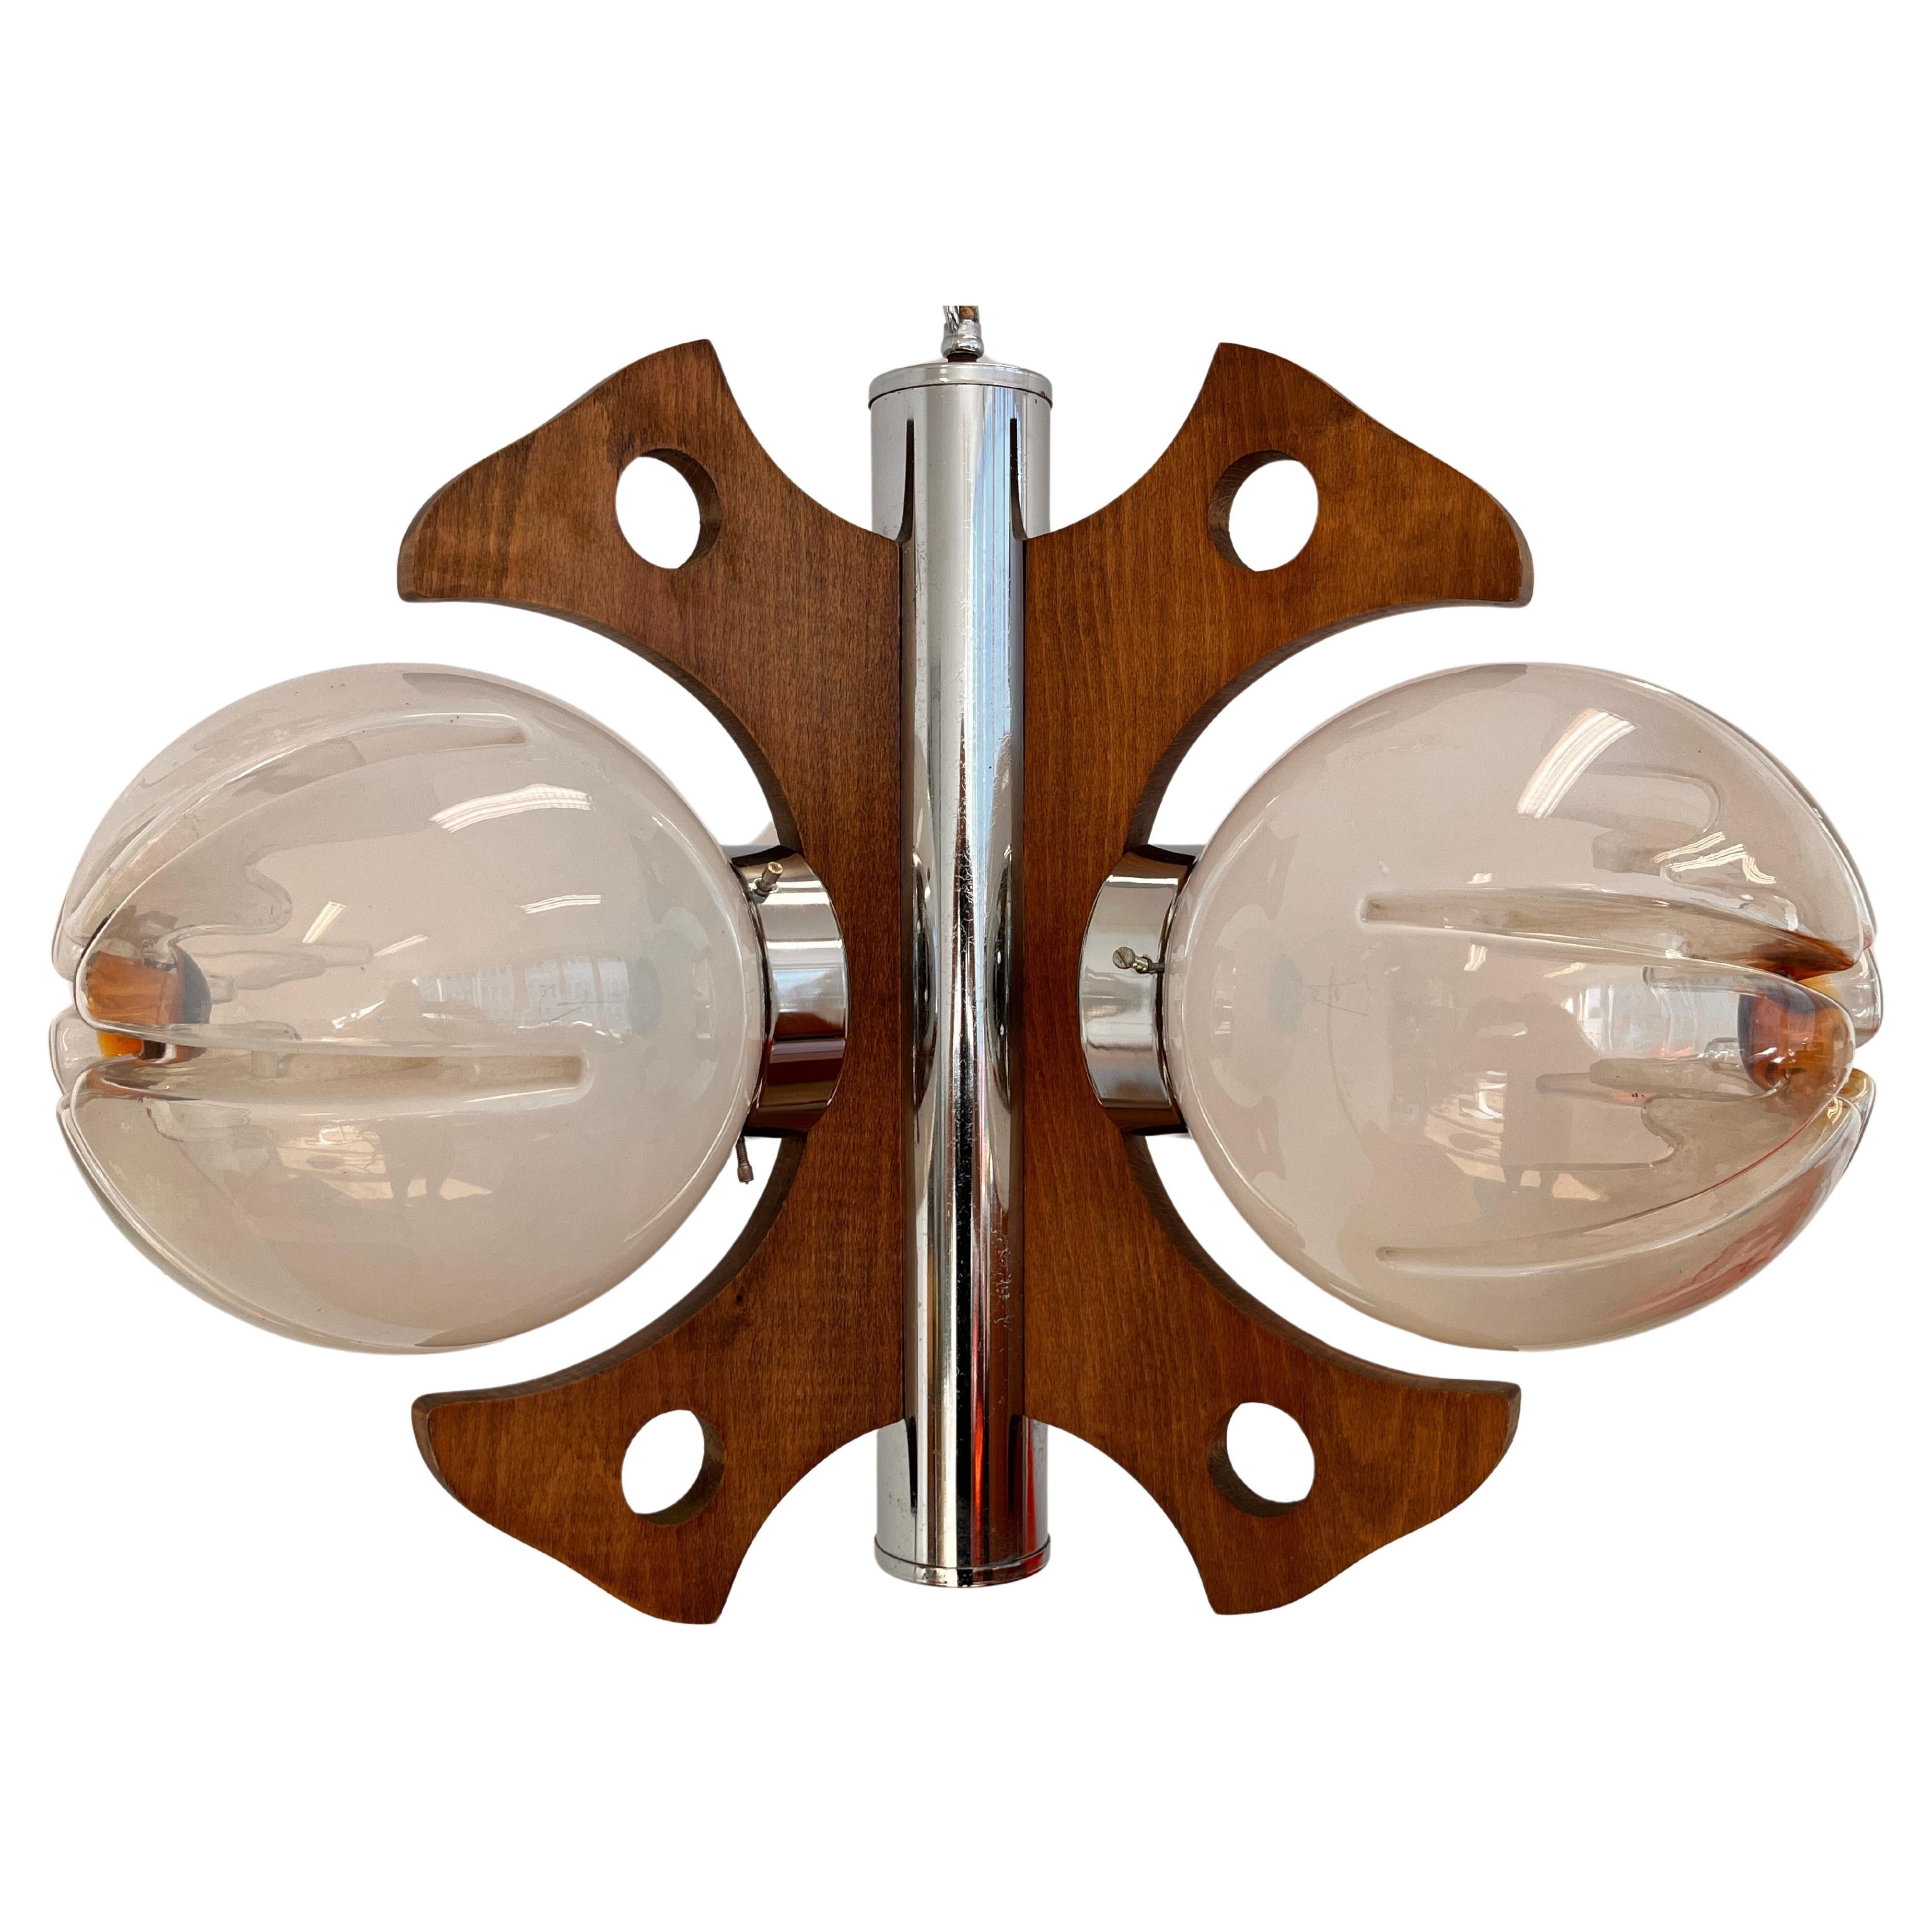 Wooden and artglass Murano pendant / chandelier - Italy, 1970s